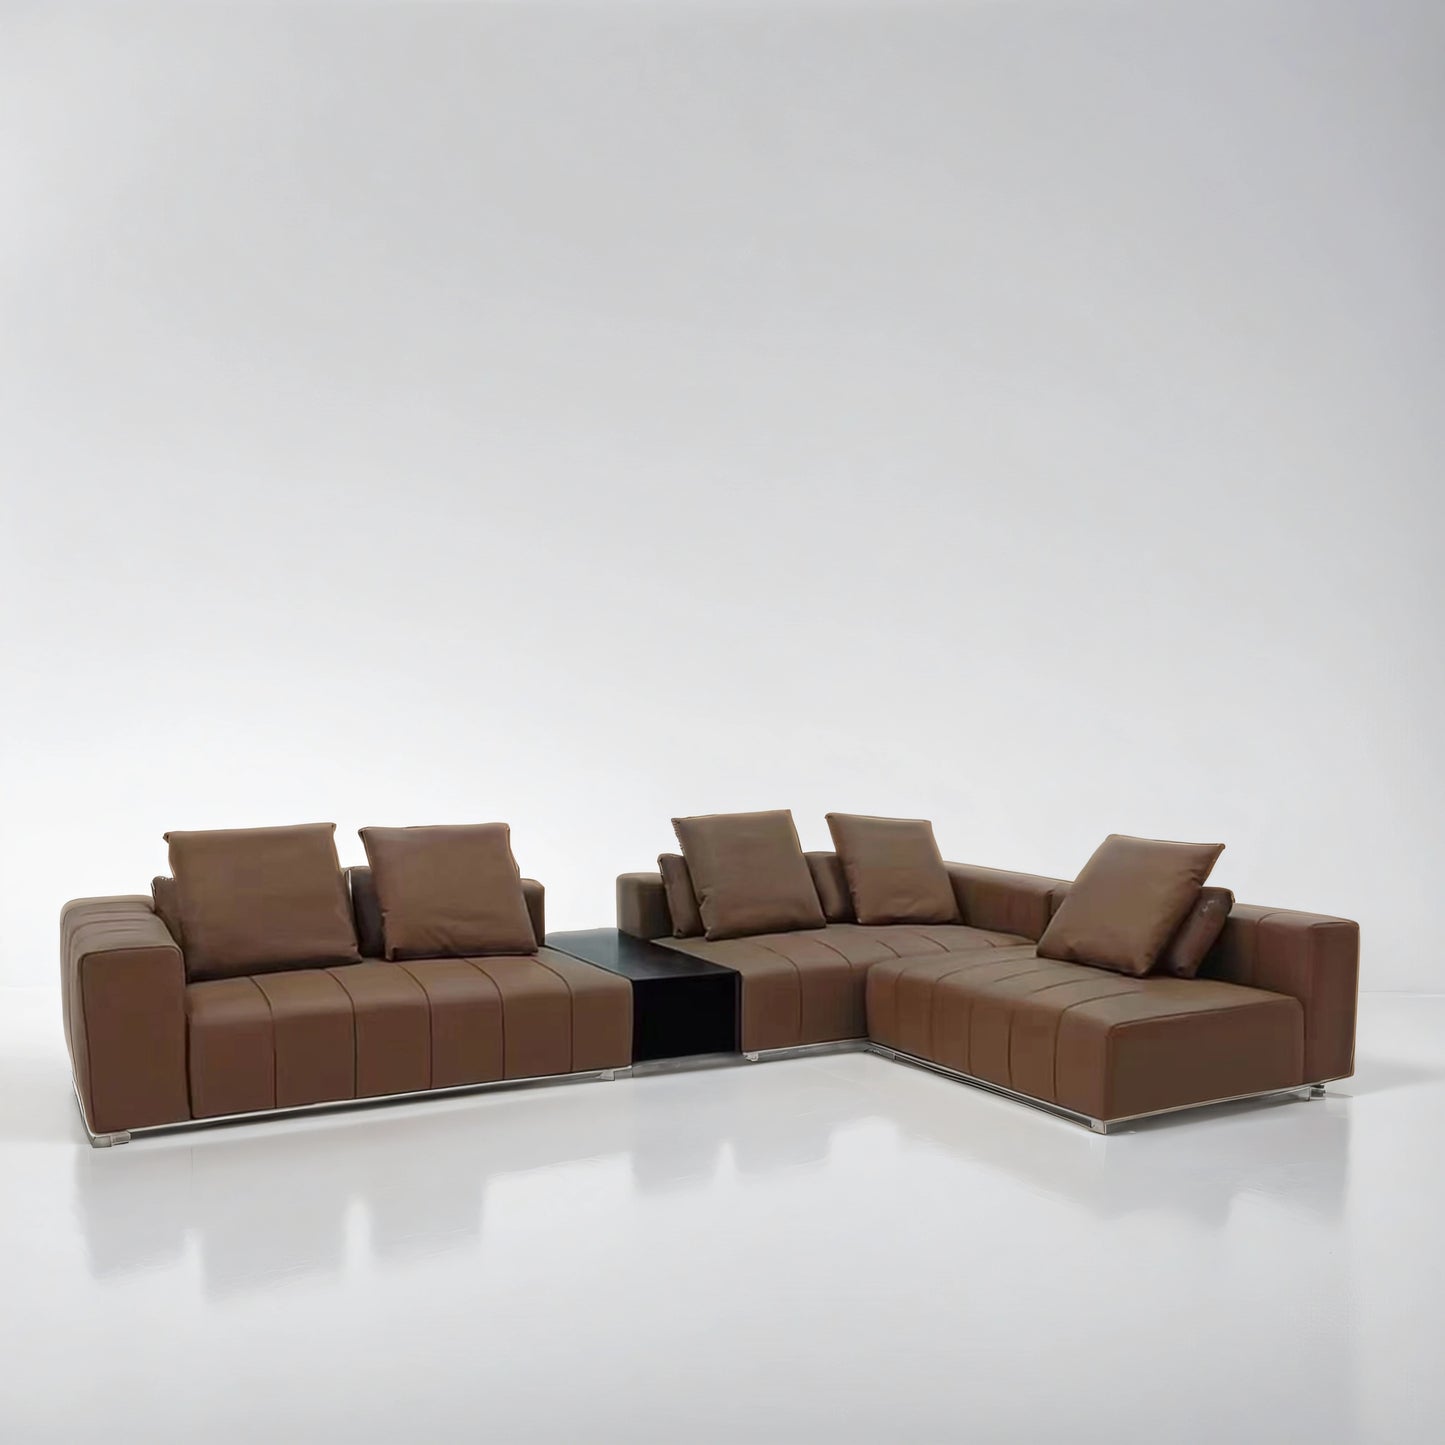 Lanka piano keys leather sofa Italian minimalist design corner leather sofa